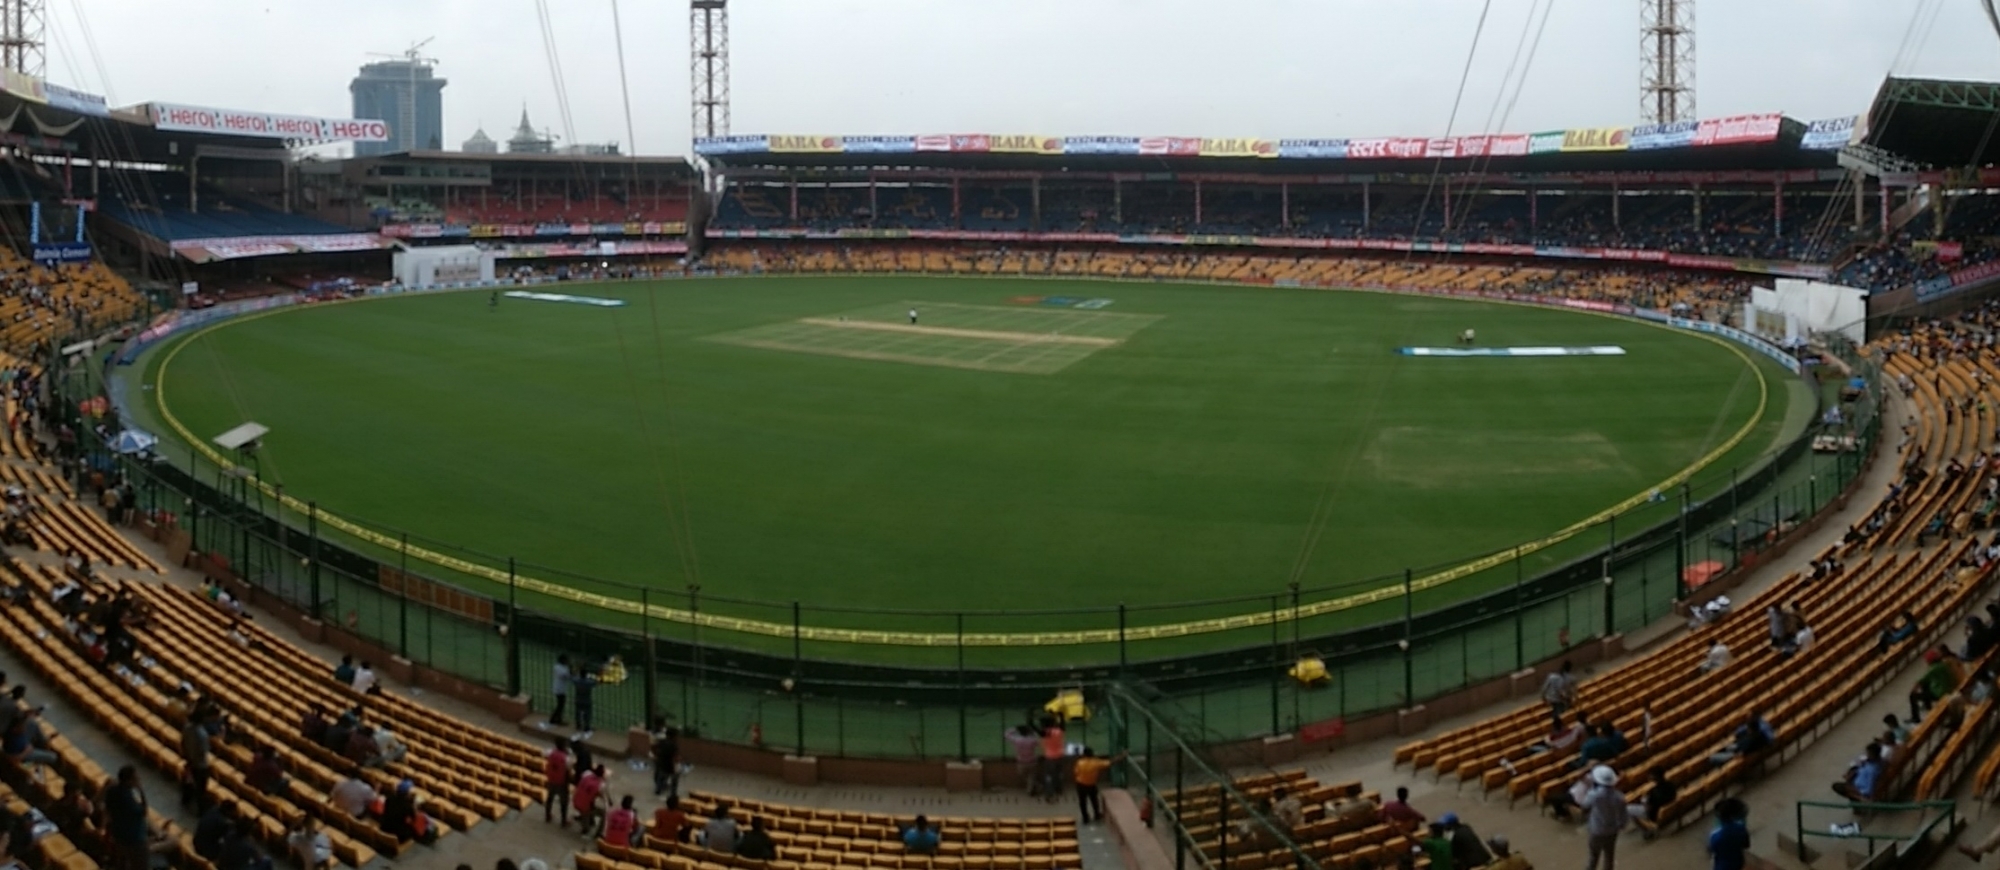 Heavy rains lash B’luru; RCB vs Gujarat Titan match may be affected